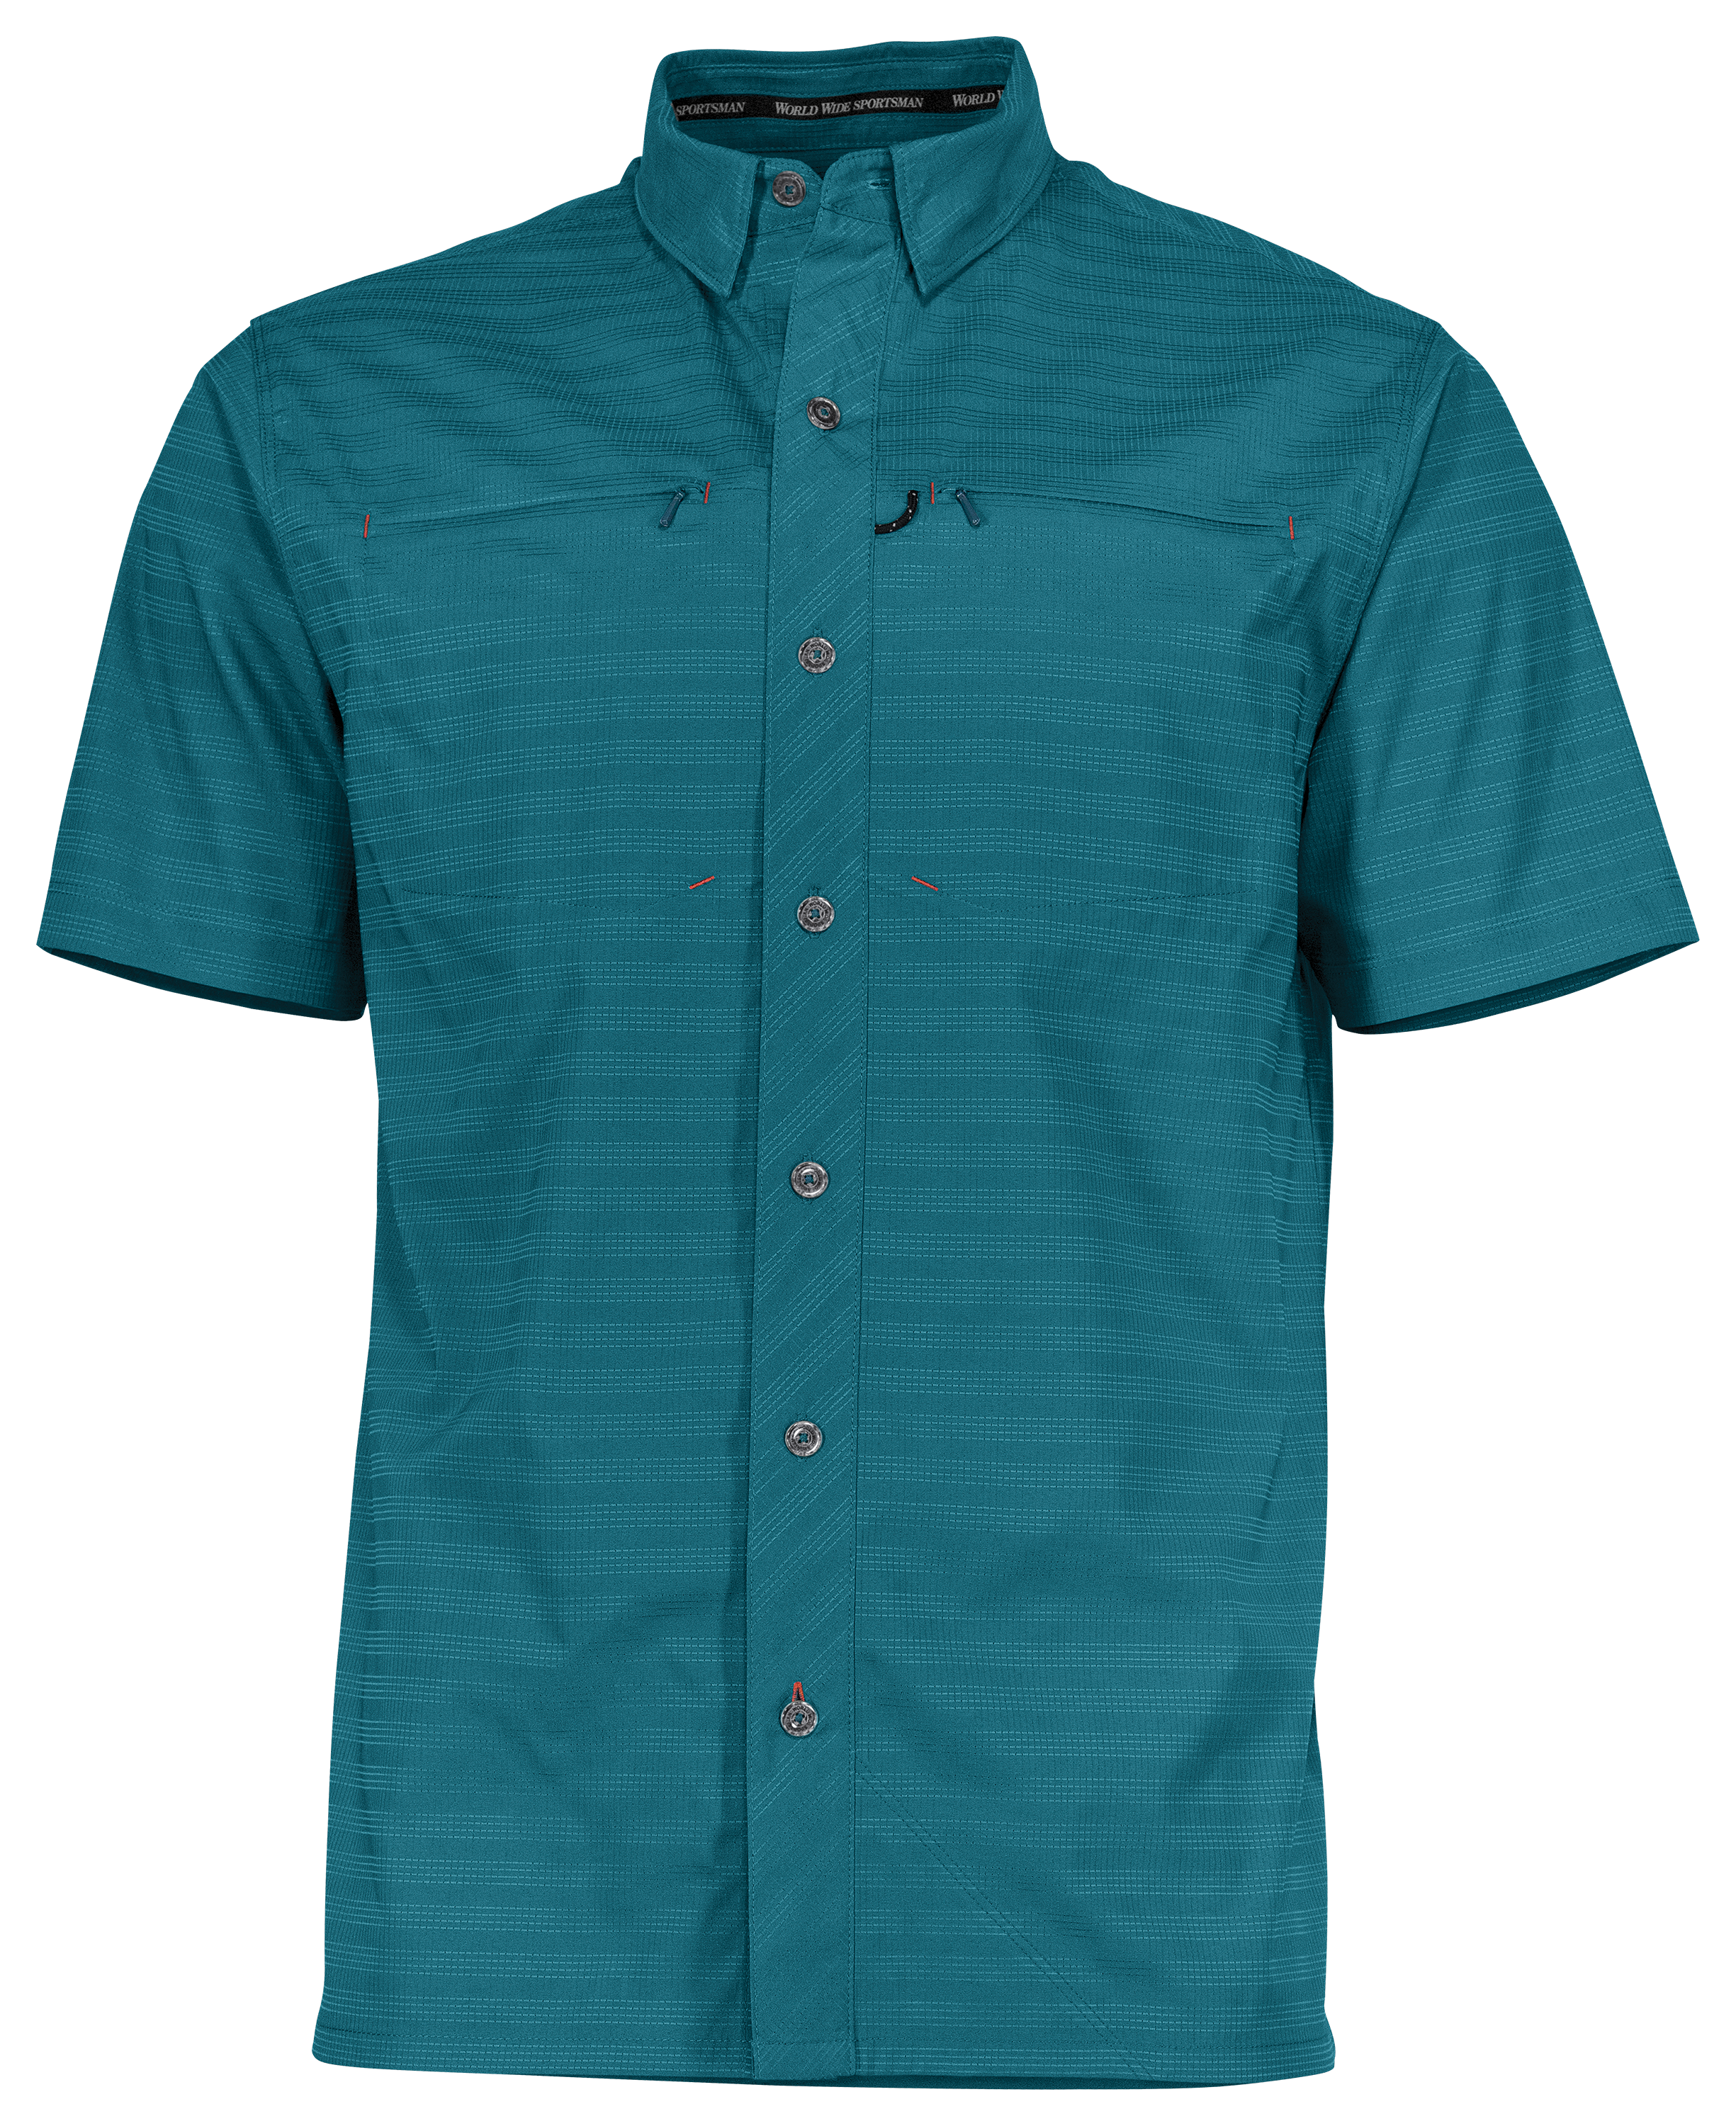 World Wide Sportsman Seacrest 2-Pocket Short-Sleeve Button-Down Shirt for Men - Tapestry - S